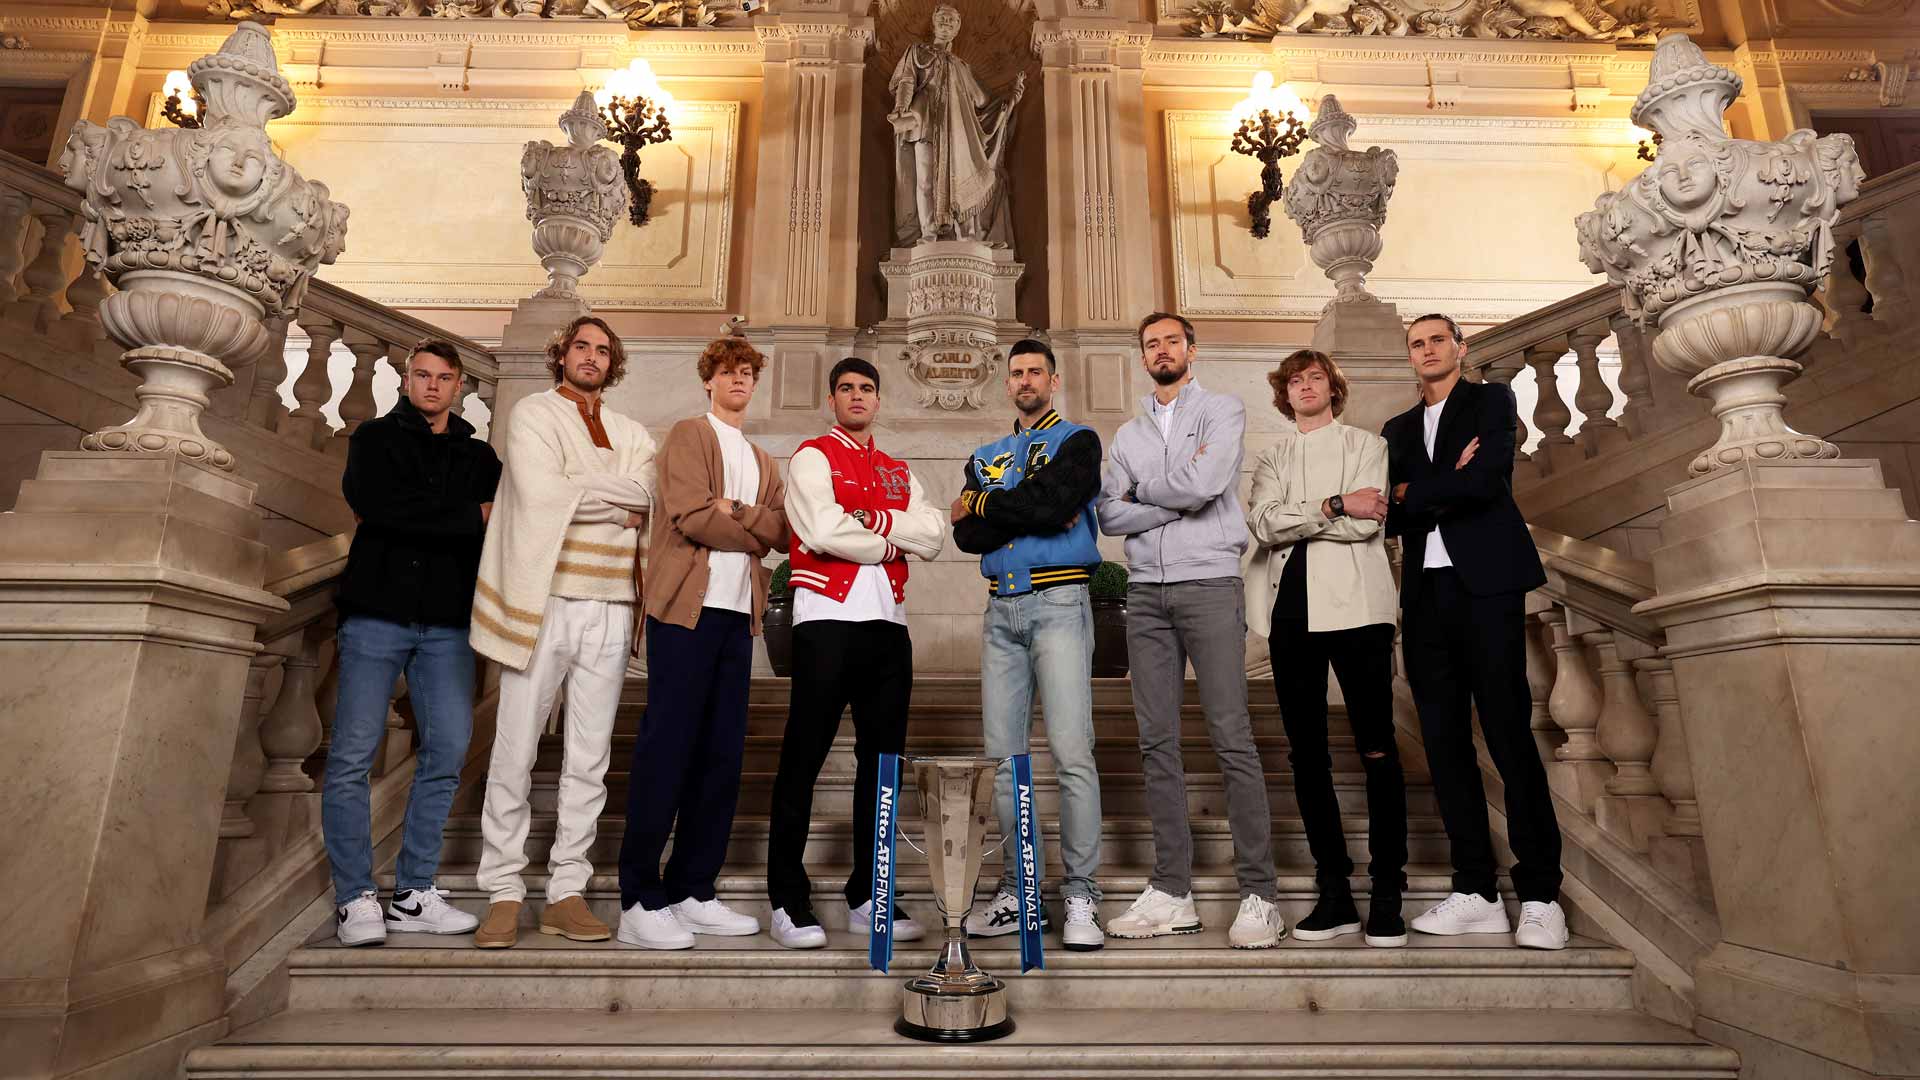 Holger Rune, Stefanos Tsitsipas, Jannik Sinner, Carlos Alcaraz, Novak Djokovic, Daniil Medvedev, Andrey Rublev and Alexander Zverev pose for the Official Photo of the 2023 Nitto ATP Finals.